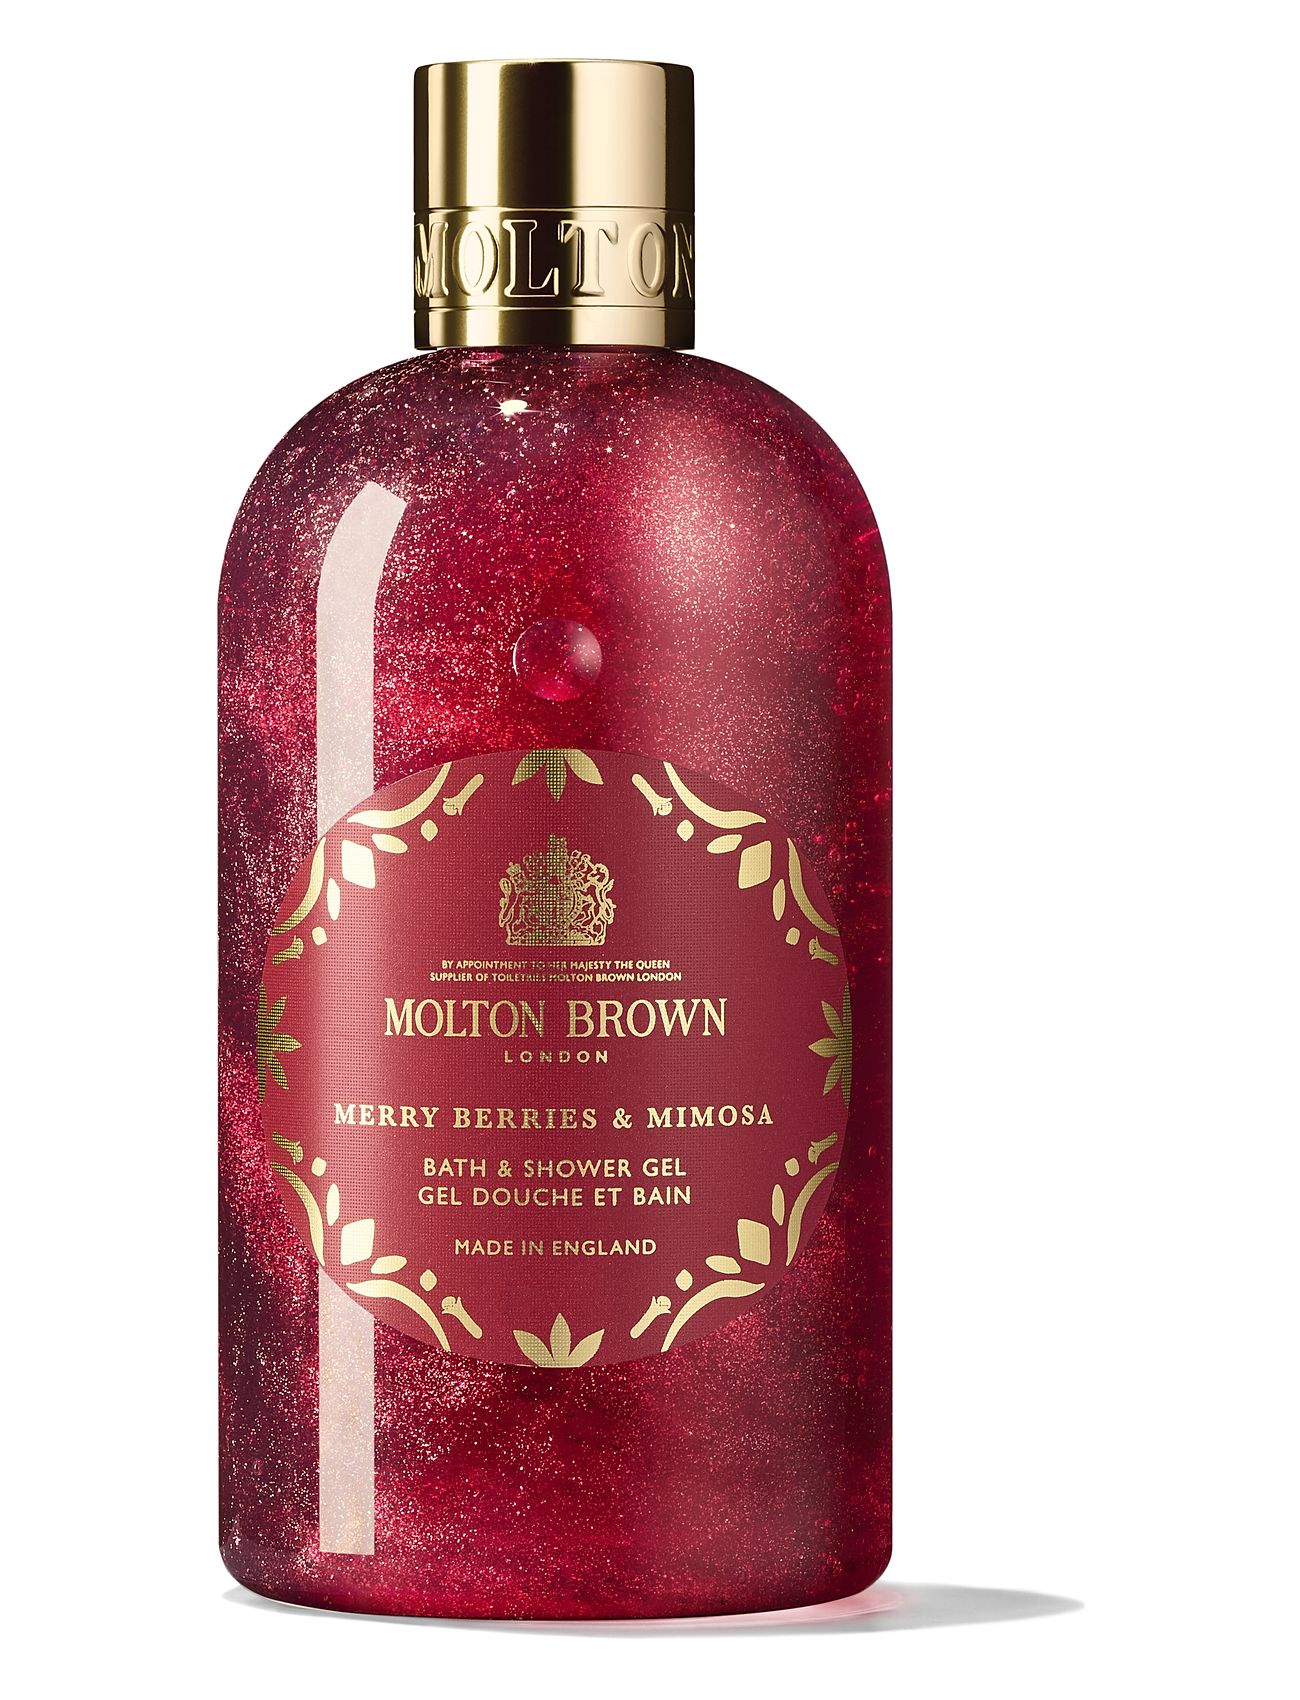 Merry Berries & Mimosa Bath & Shower Gel 300Ml Set Bath & Body Nude Molton Brown